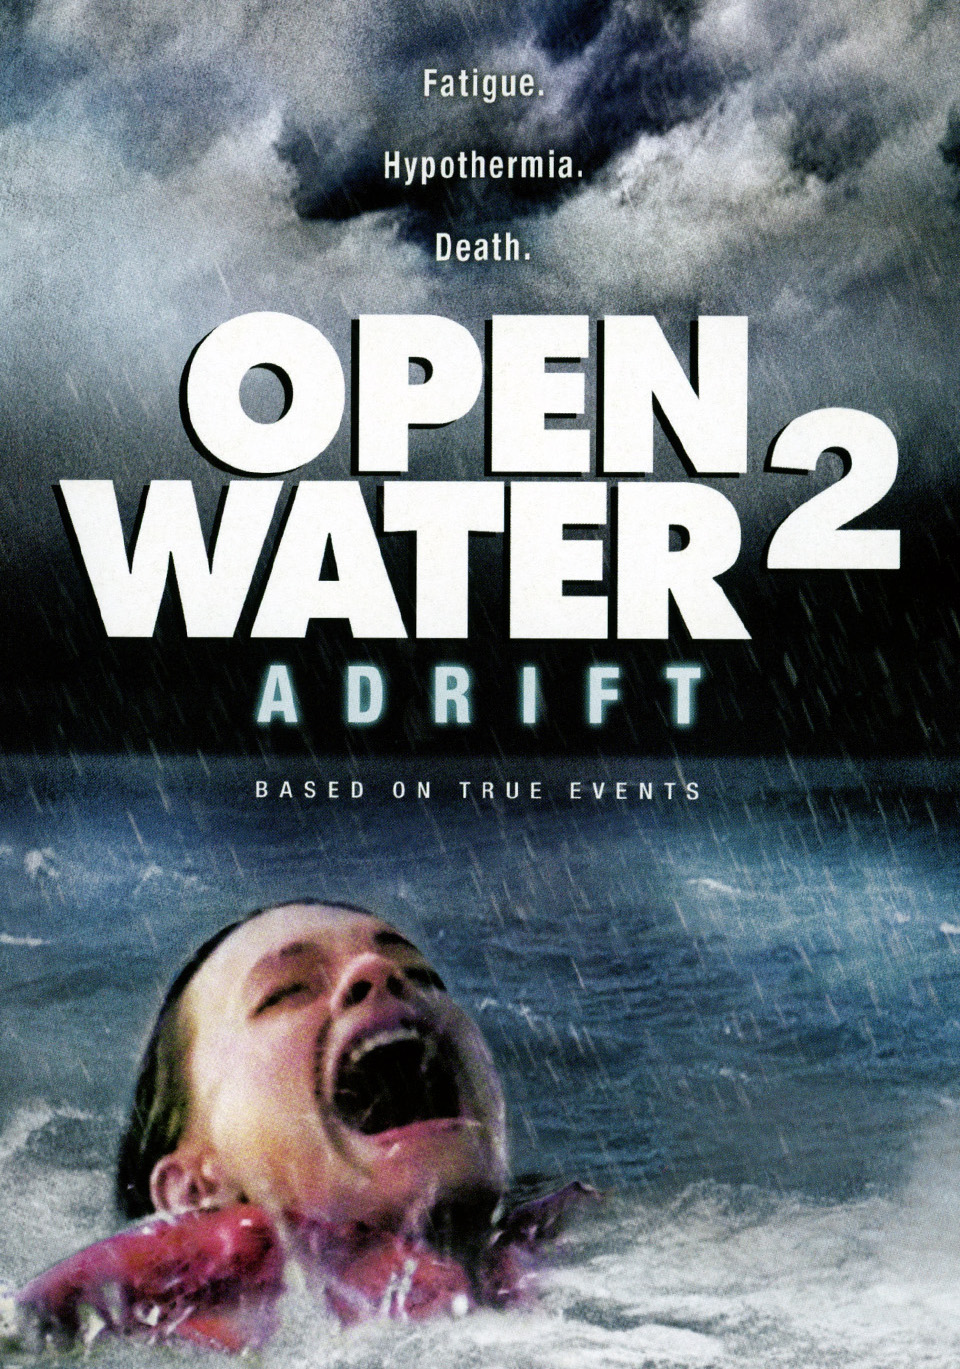 Open Water 2 Adrift (2006) วิกฤตหนีตาย ลึกเฉียดนรก ภาค2 พากย์ไทย